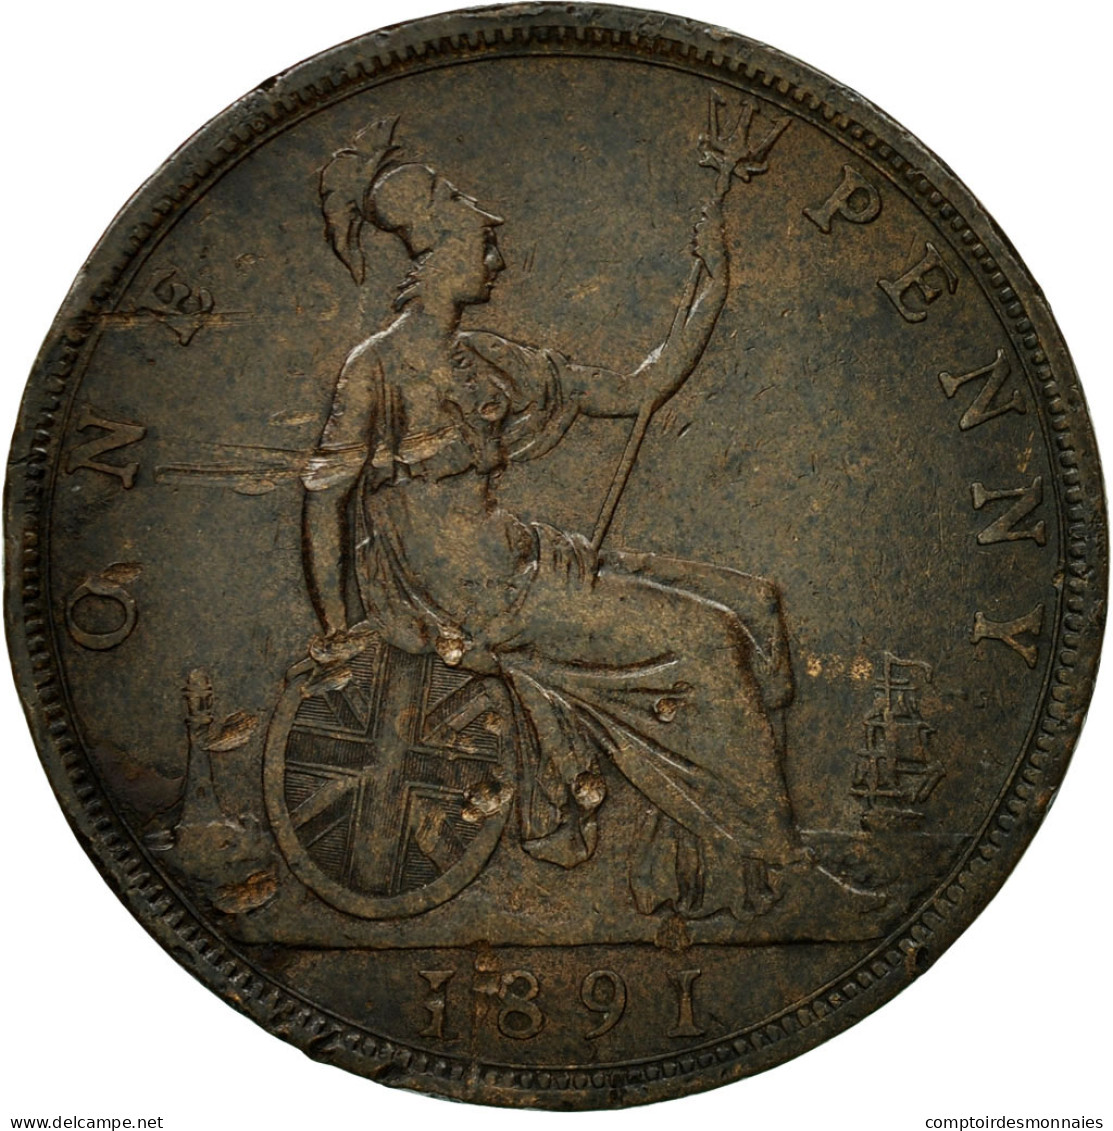 Monnaie, Grande-Bretagne, Victoria, Penny, 1891, B+, Bronze, KM:755 - D. 1 Penny